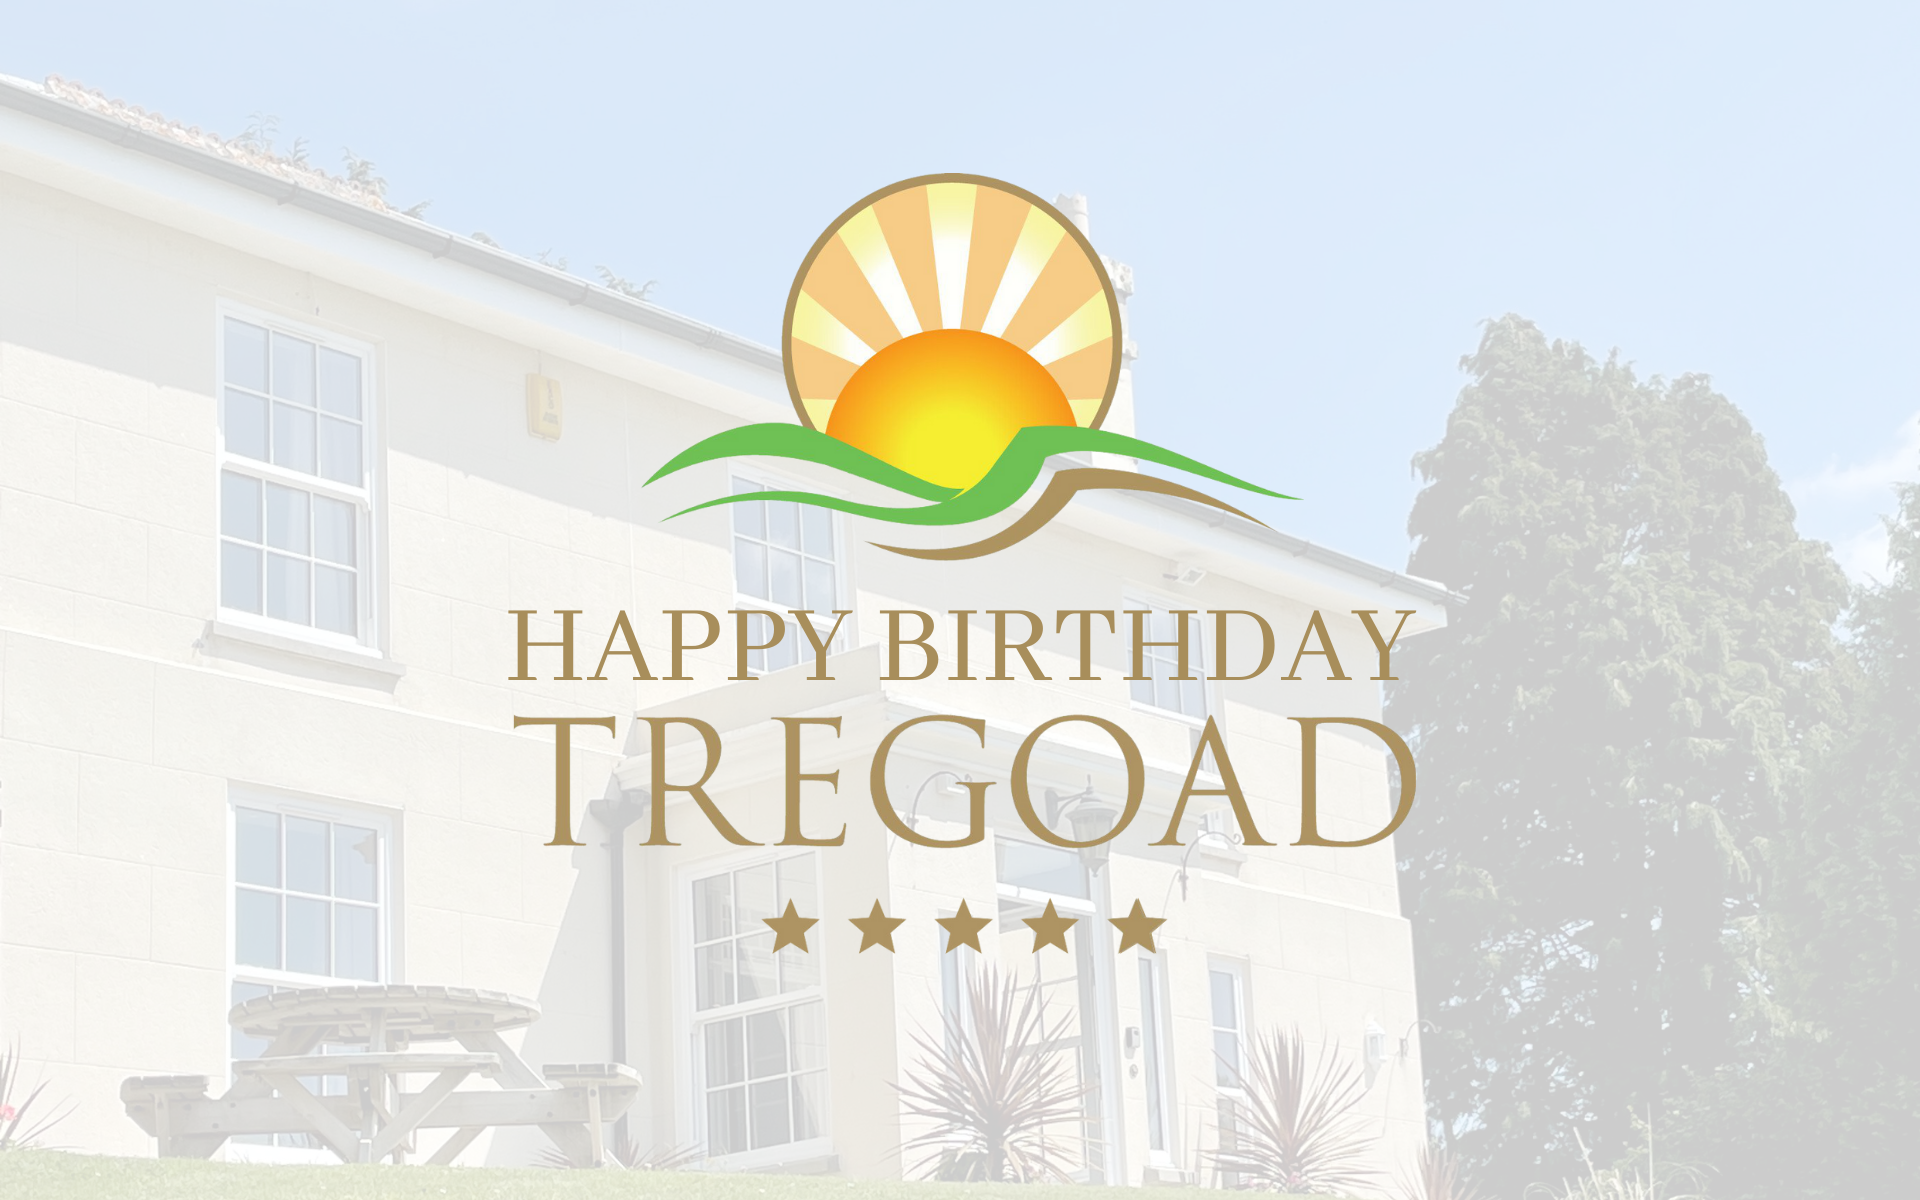 Happy birthday tregoad blog header